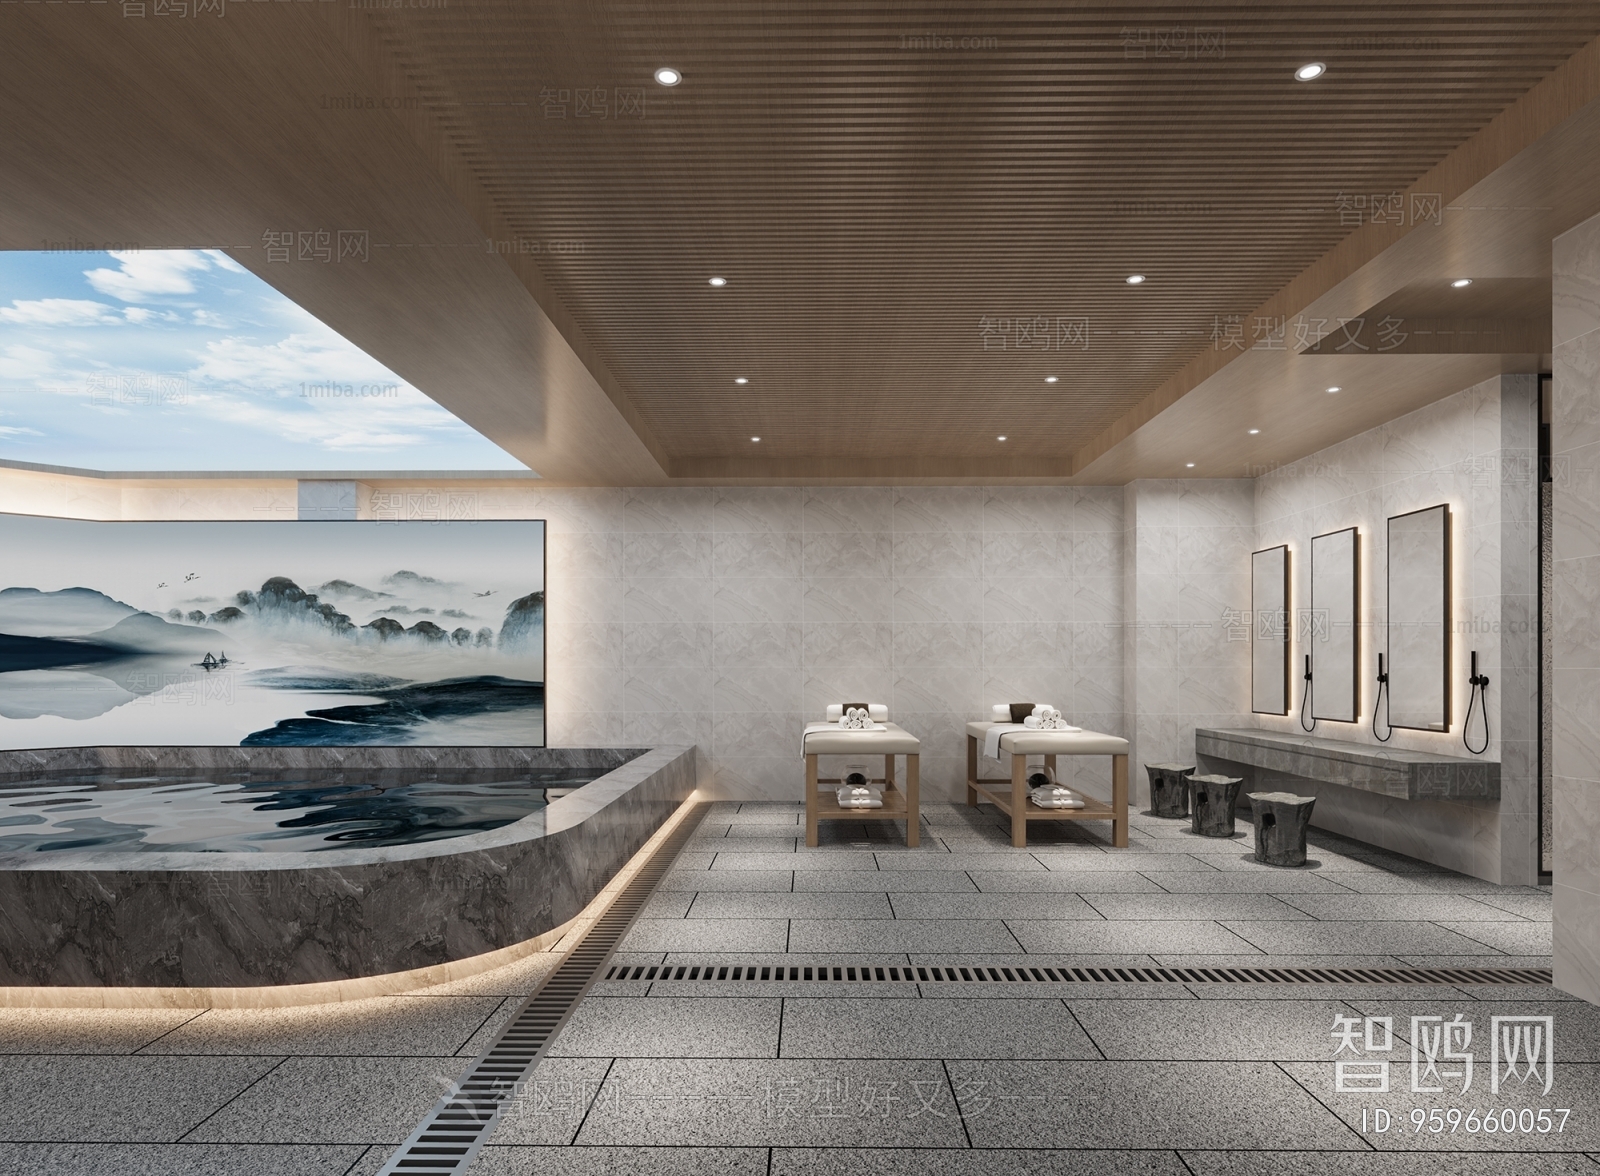 Modern Bath Center